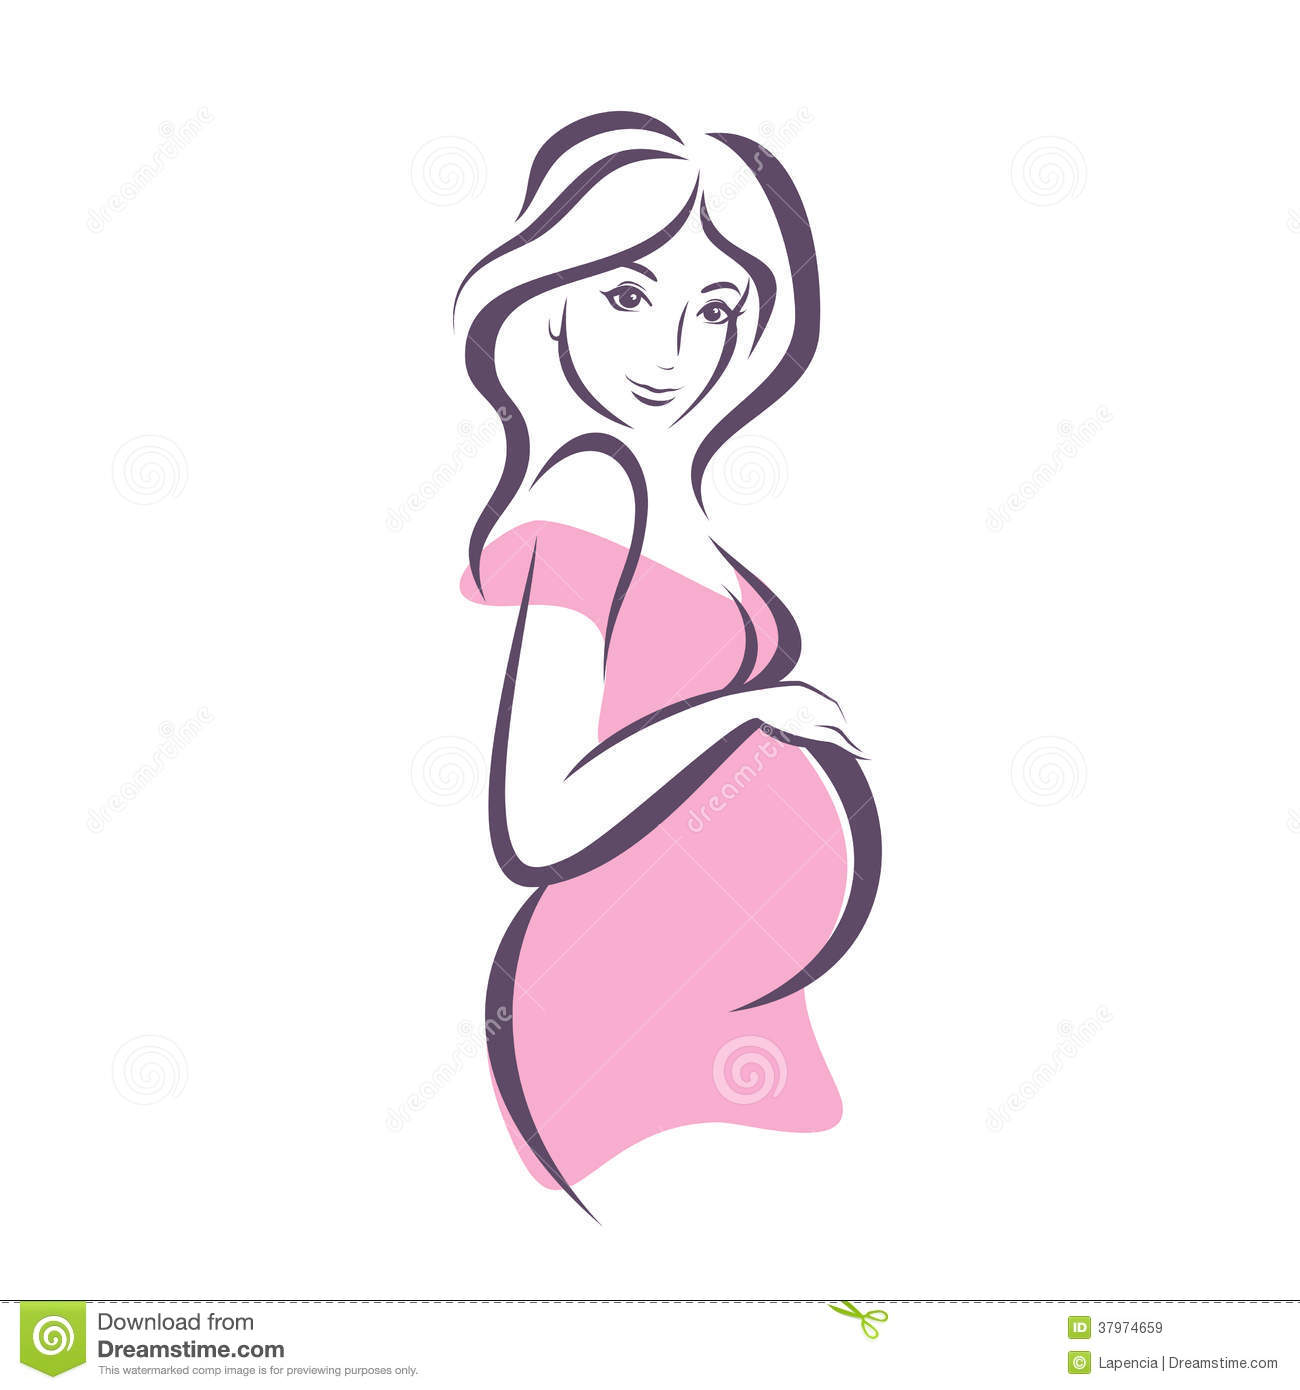 pregnancy clipart - Pregnancy Clip Art